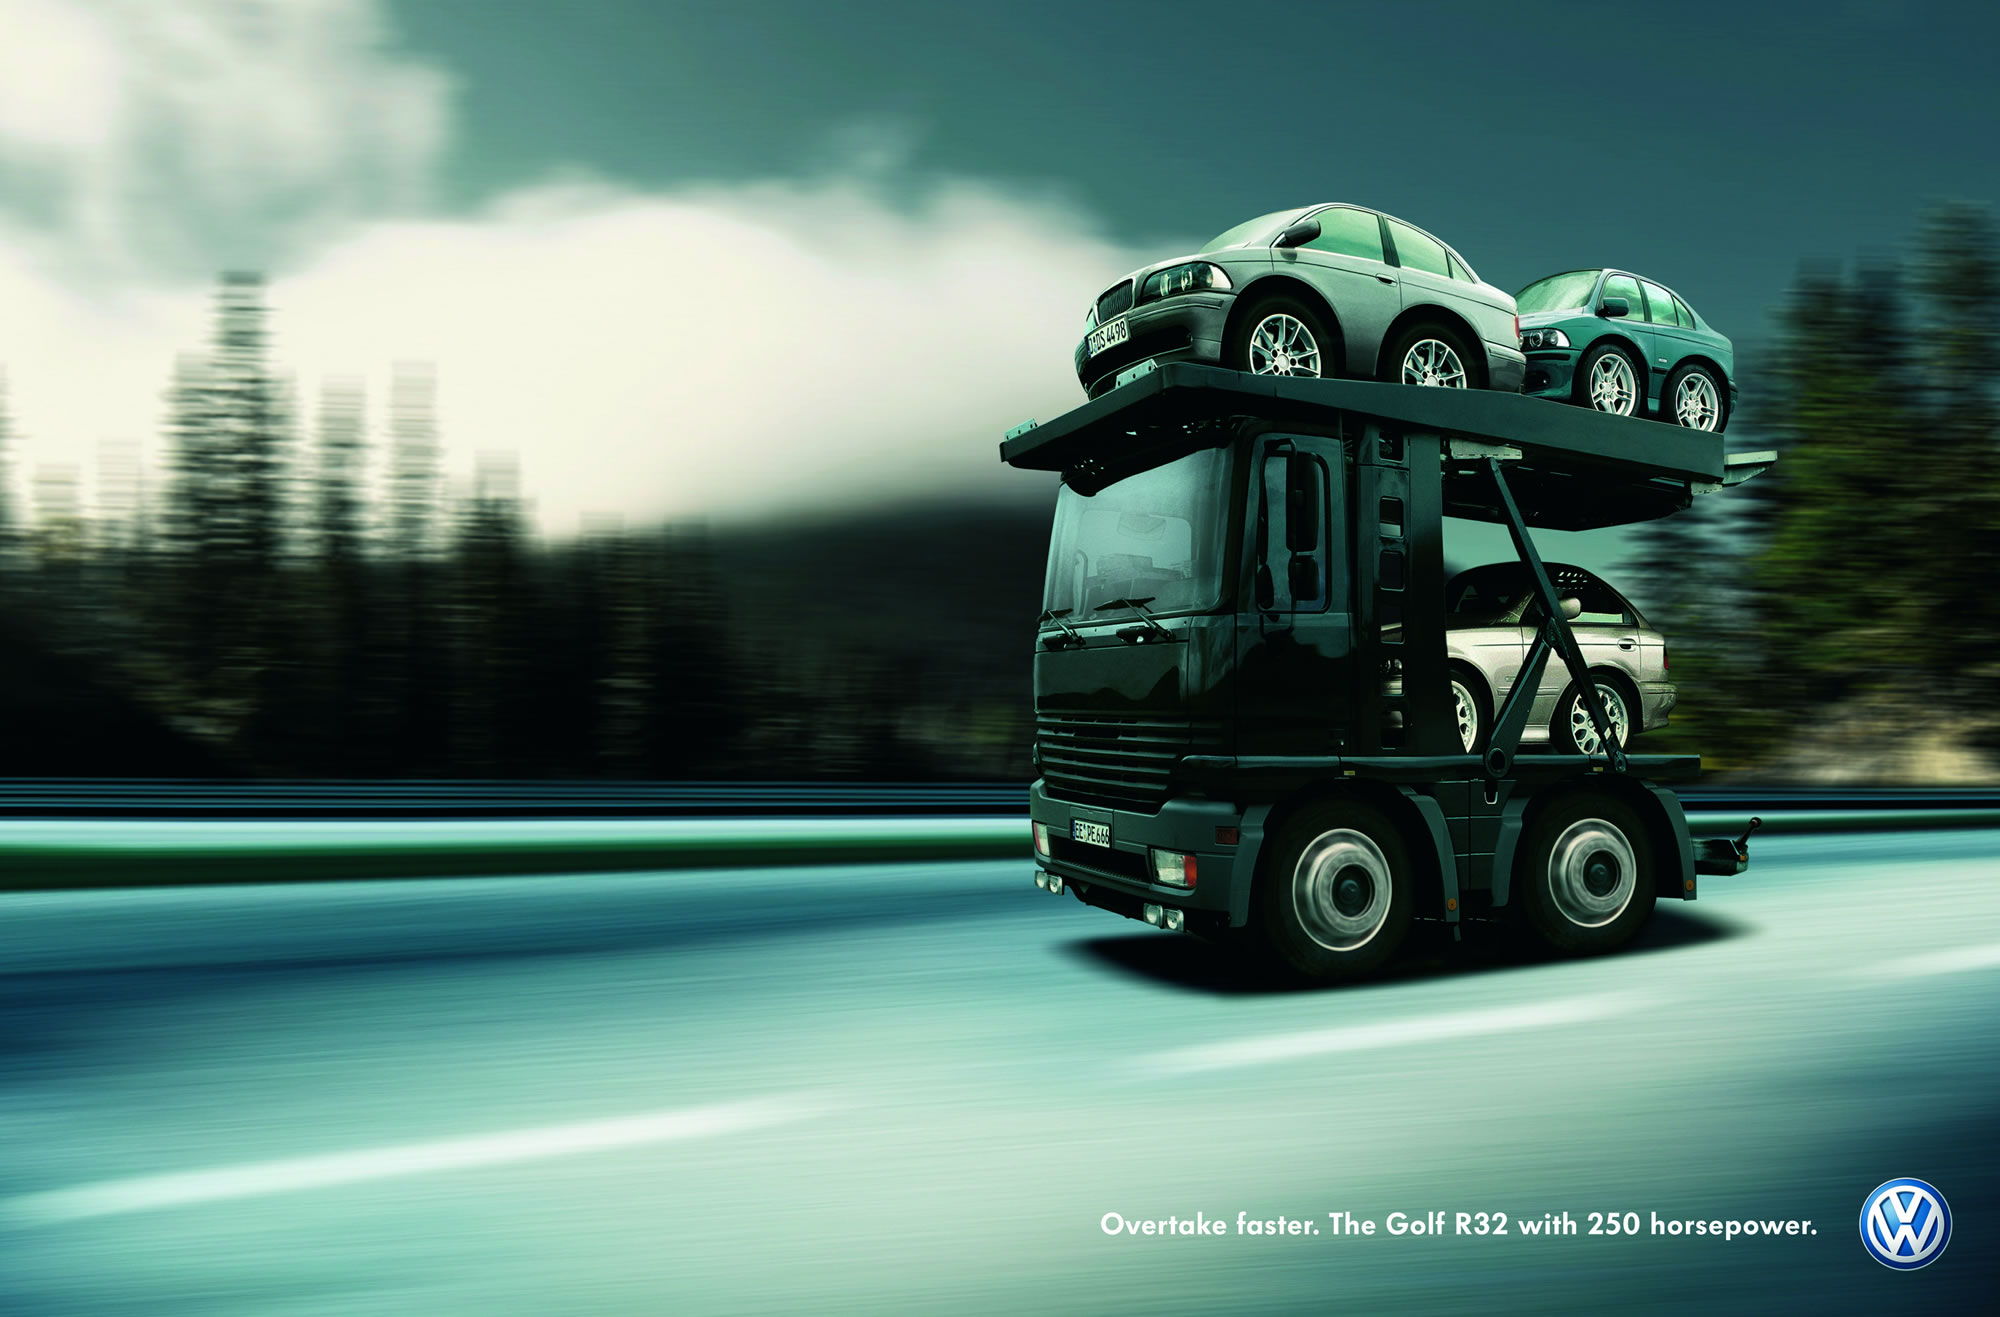 trucks, vehicles, photo manipulation - desktop wallpaper